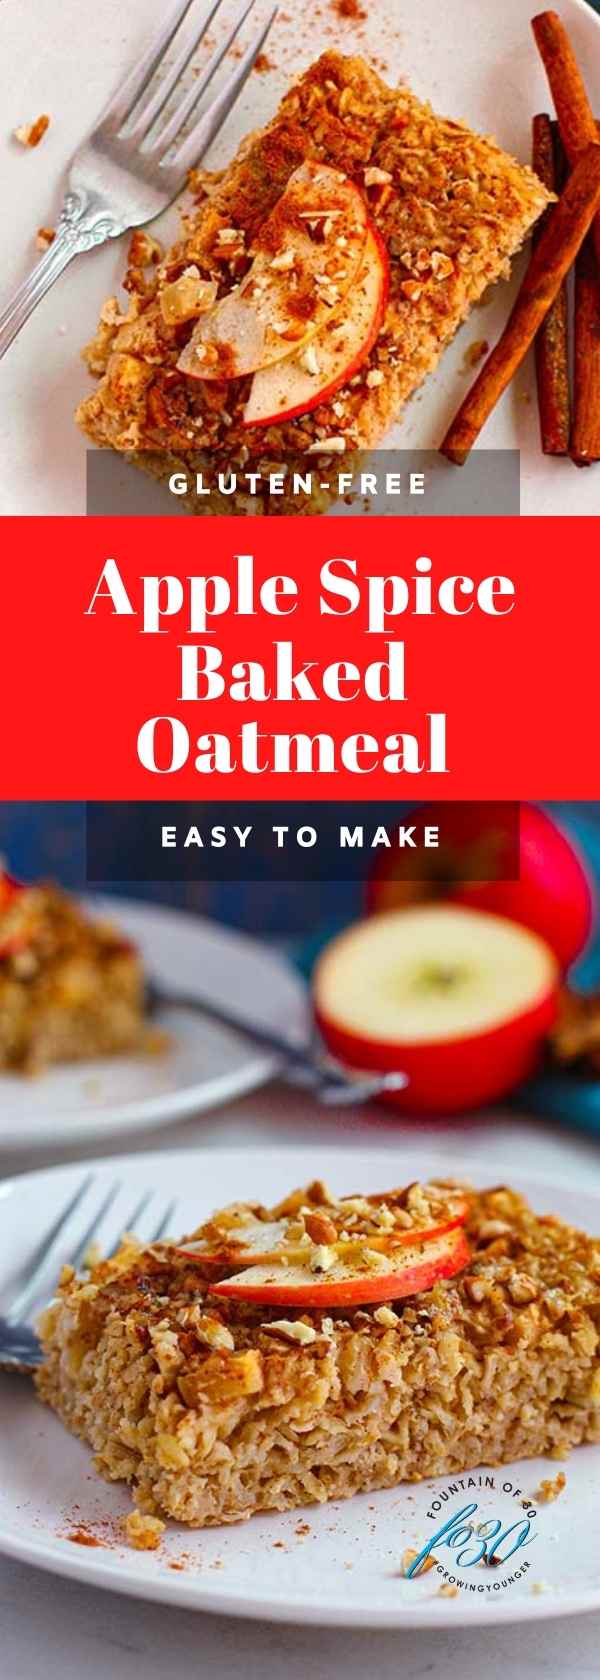 apple spice baked oatmeal recipe fountainof30